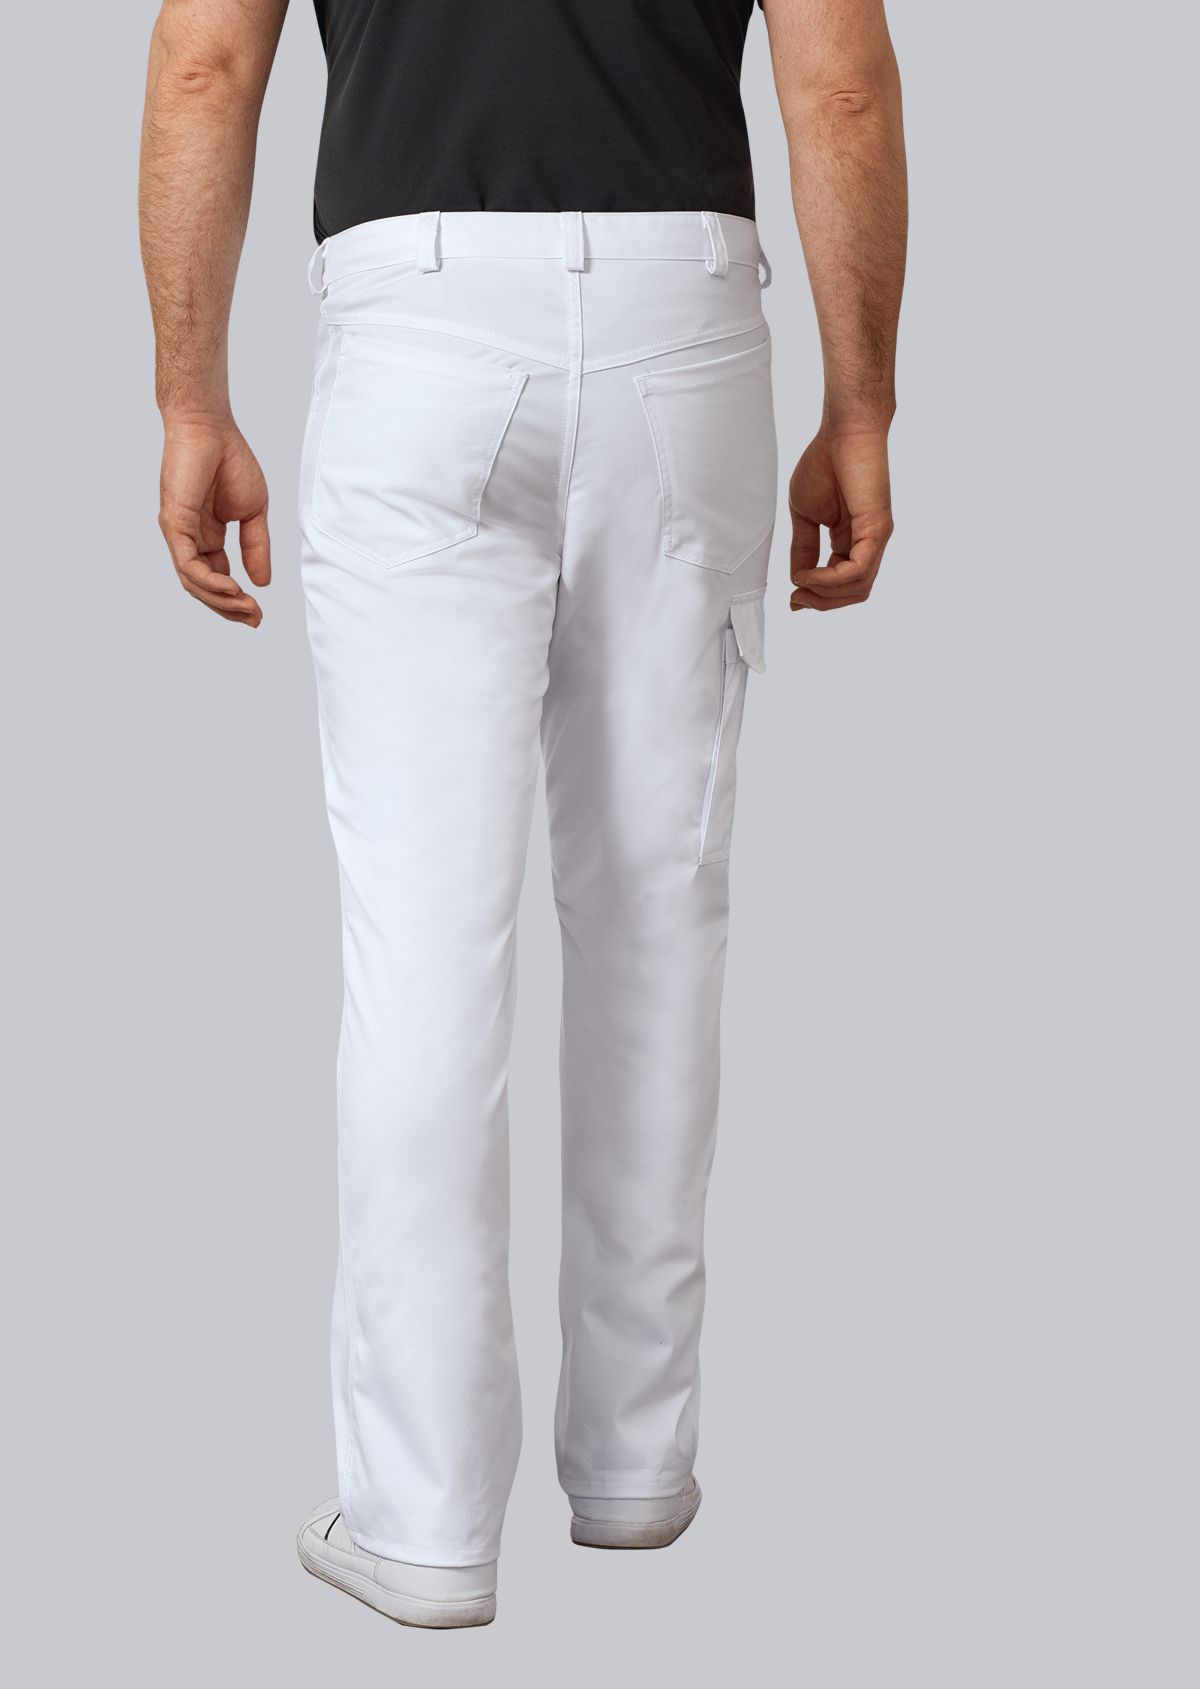 BP® Stretch unisex jeans